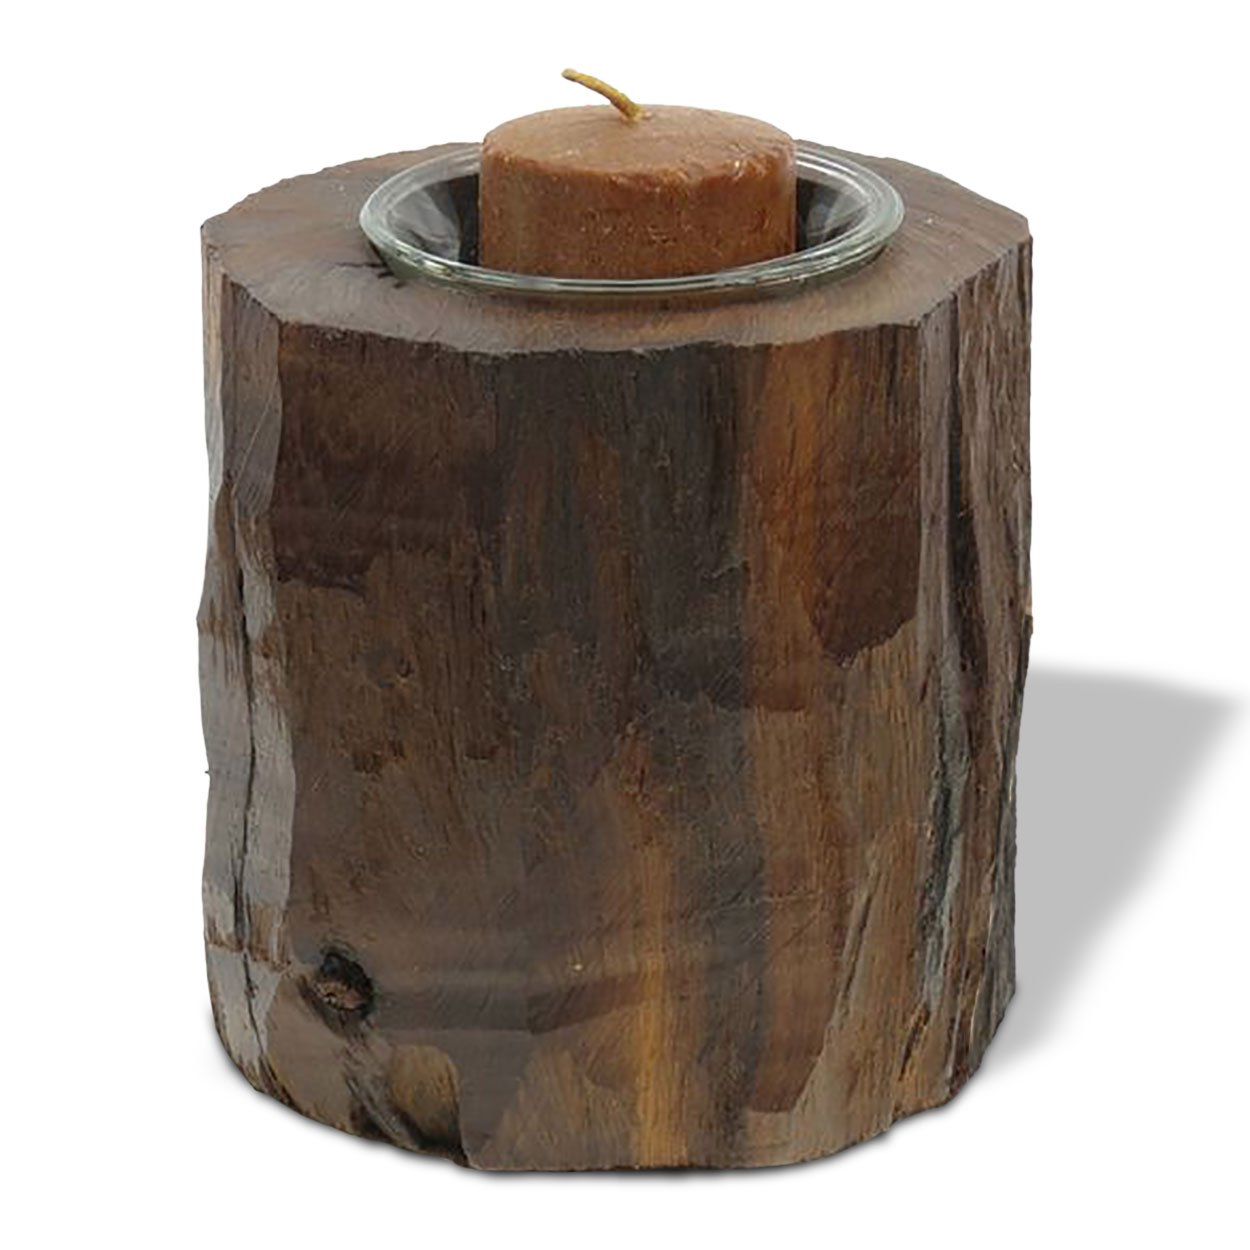 172025 - Rustic Log Carved Ironwood Candle Holder